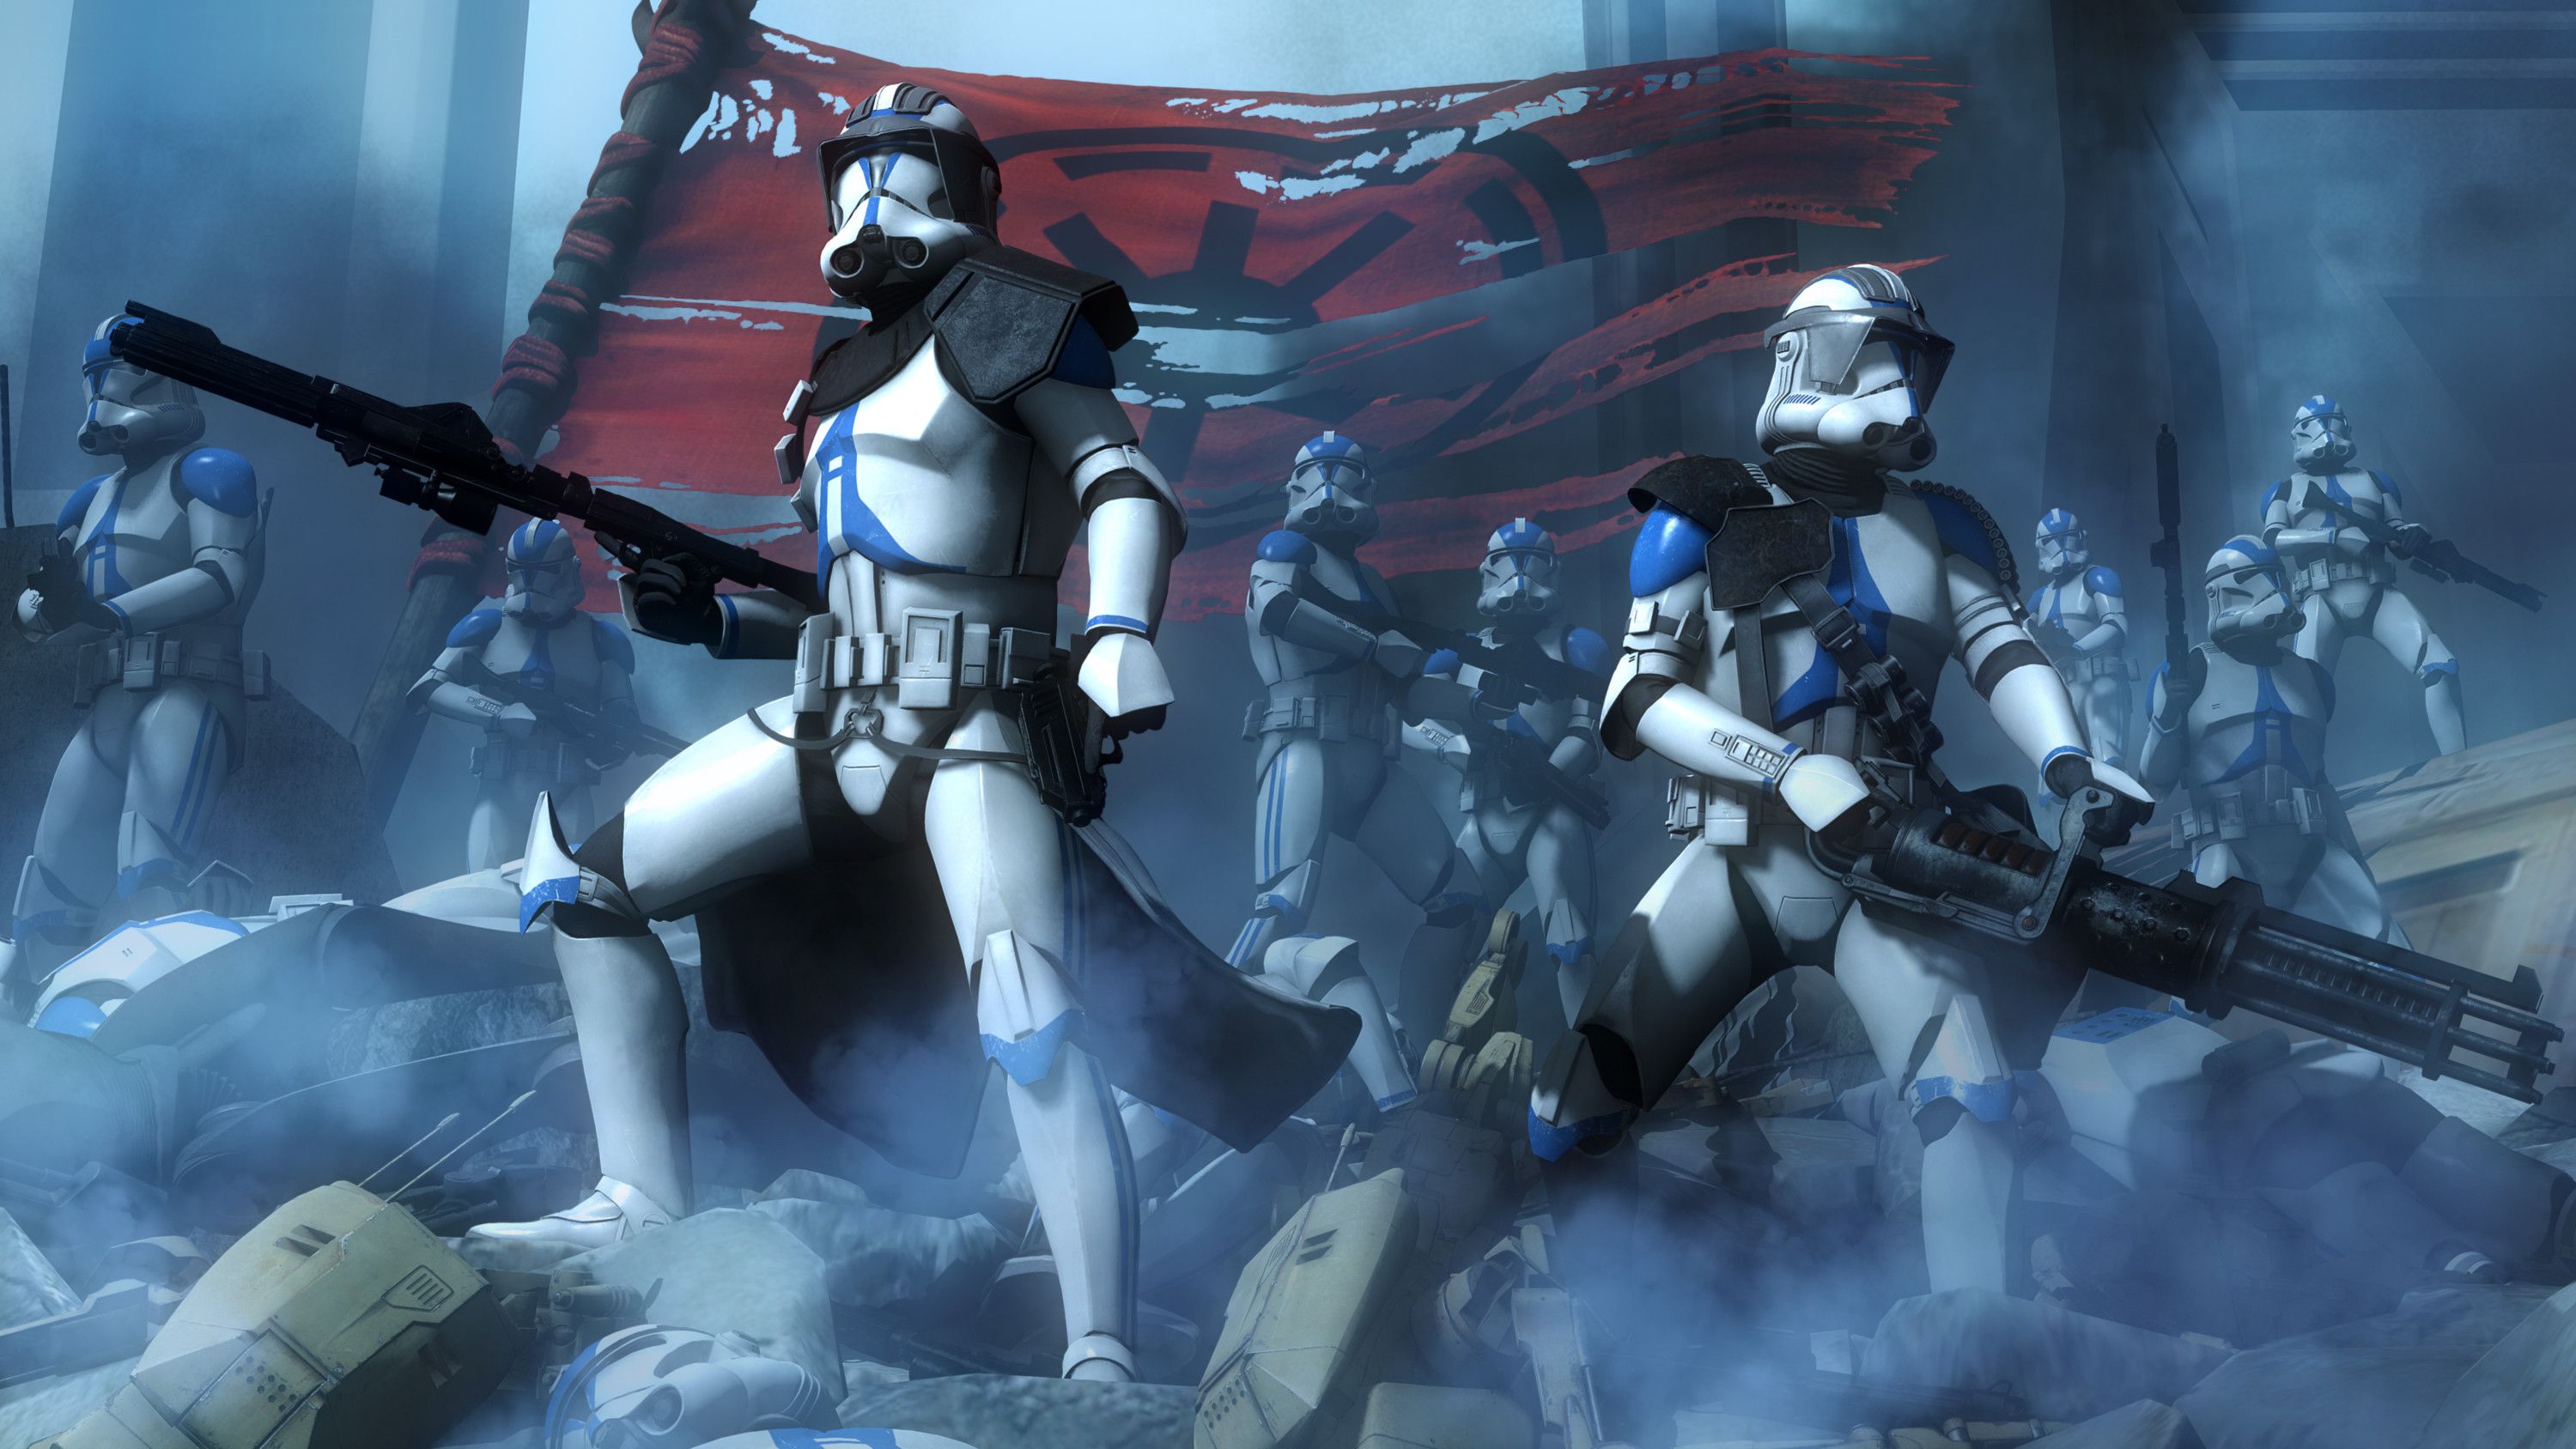 Star Wars Clone Trooper Wallpaper background picture